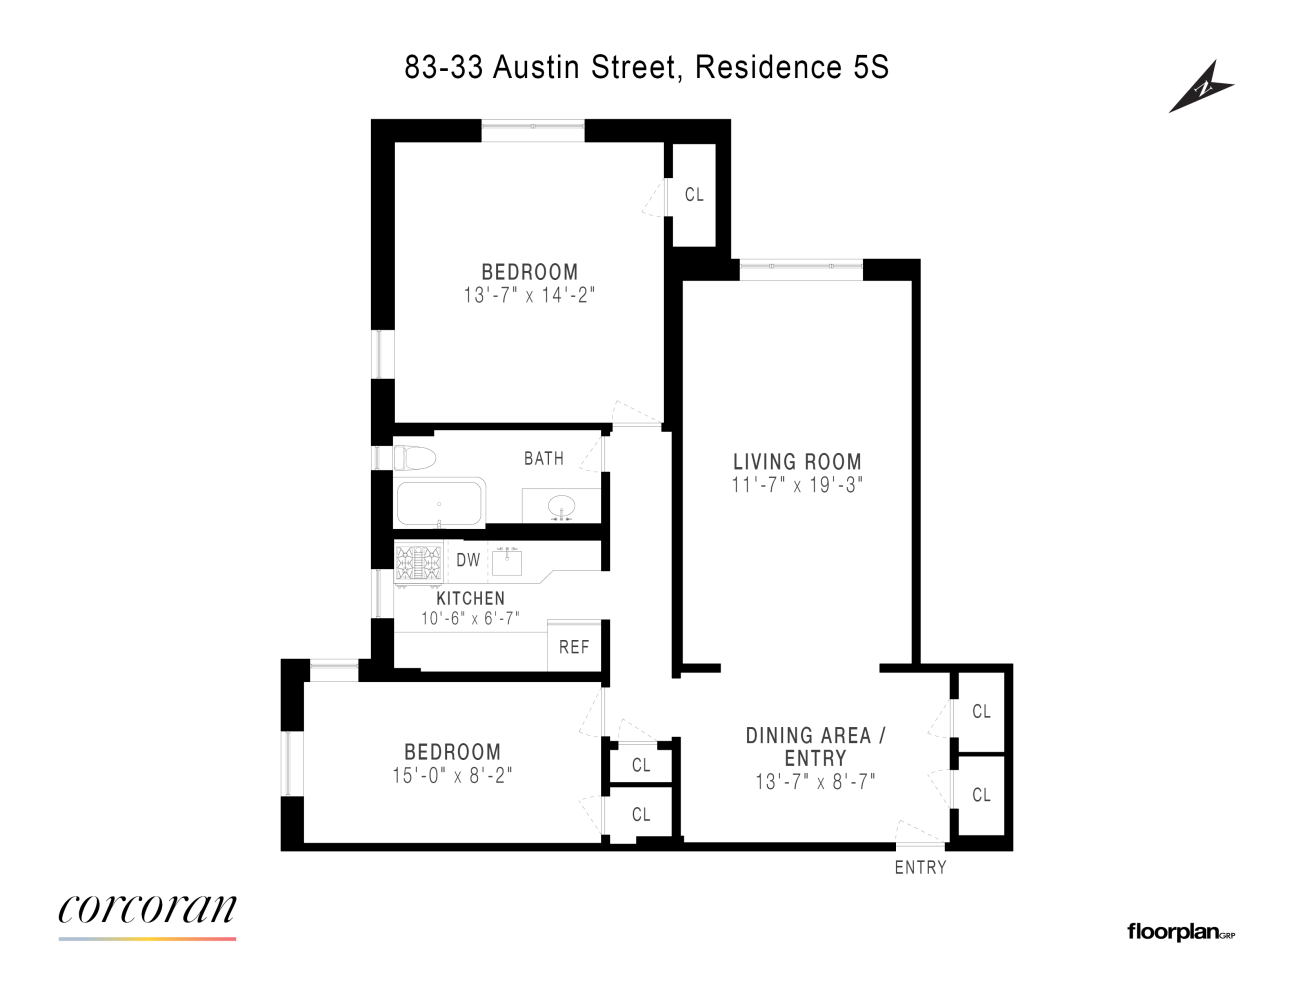 Floorplan for 83-33 Austin Street